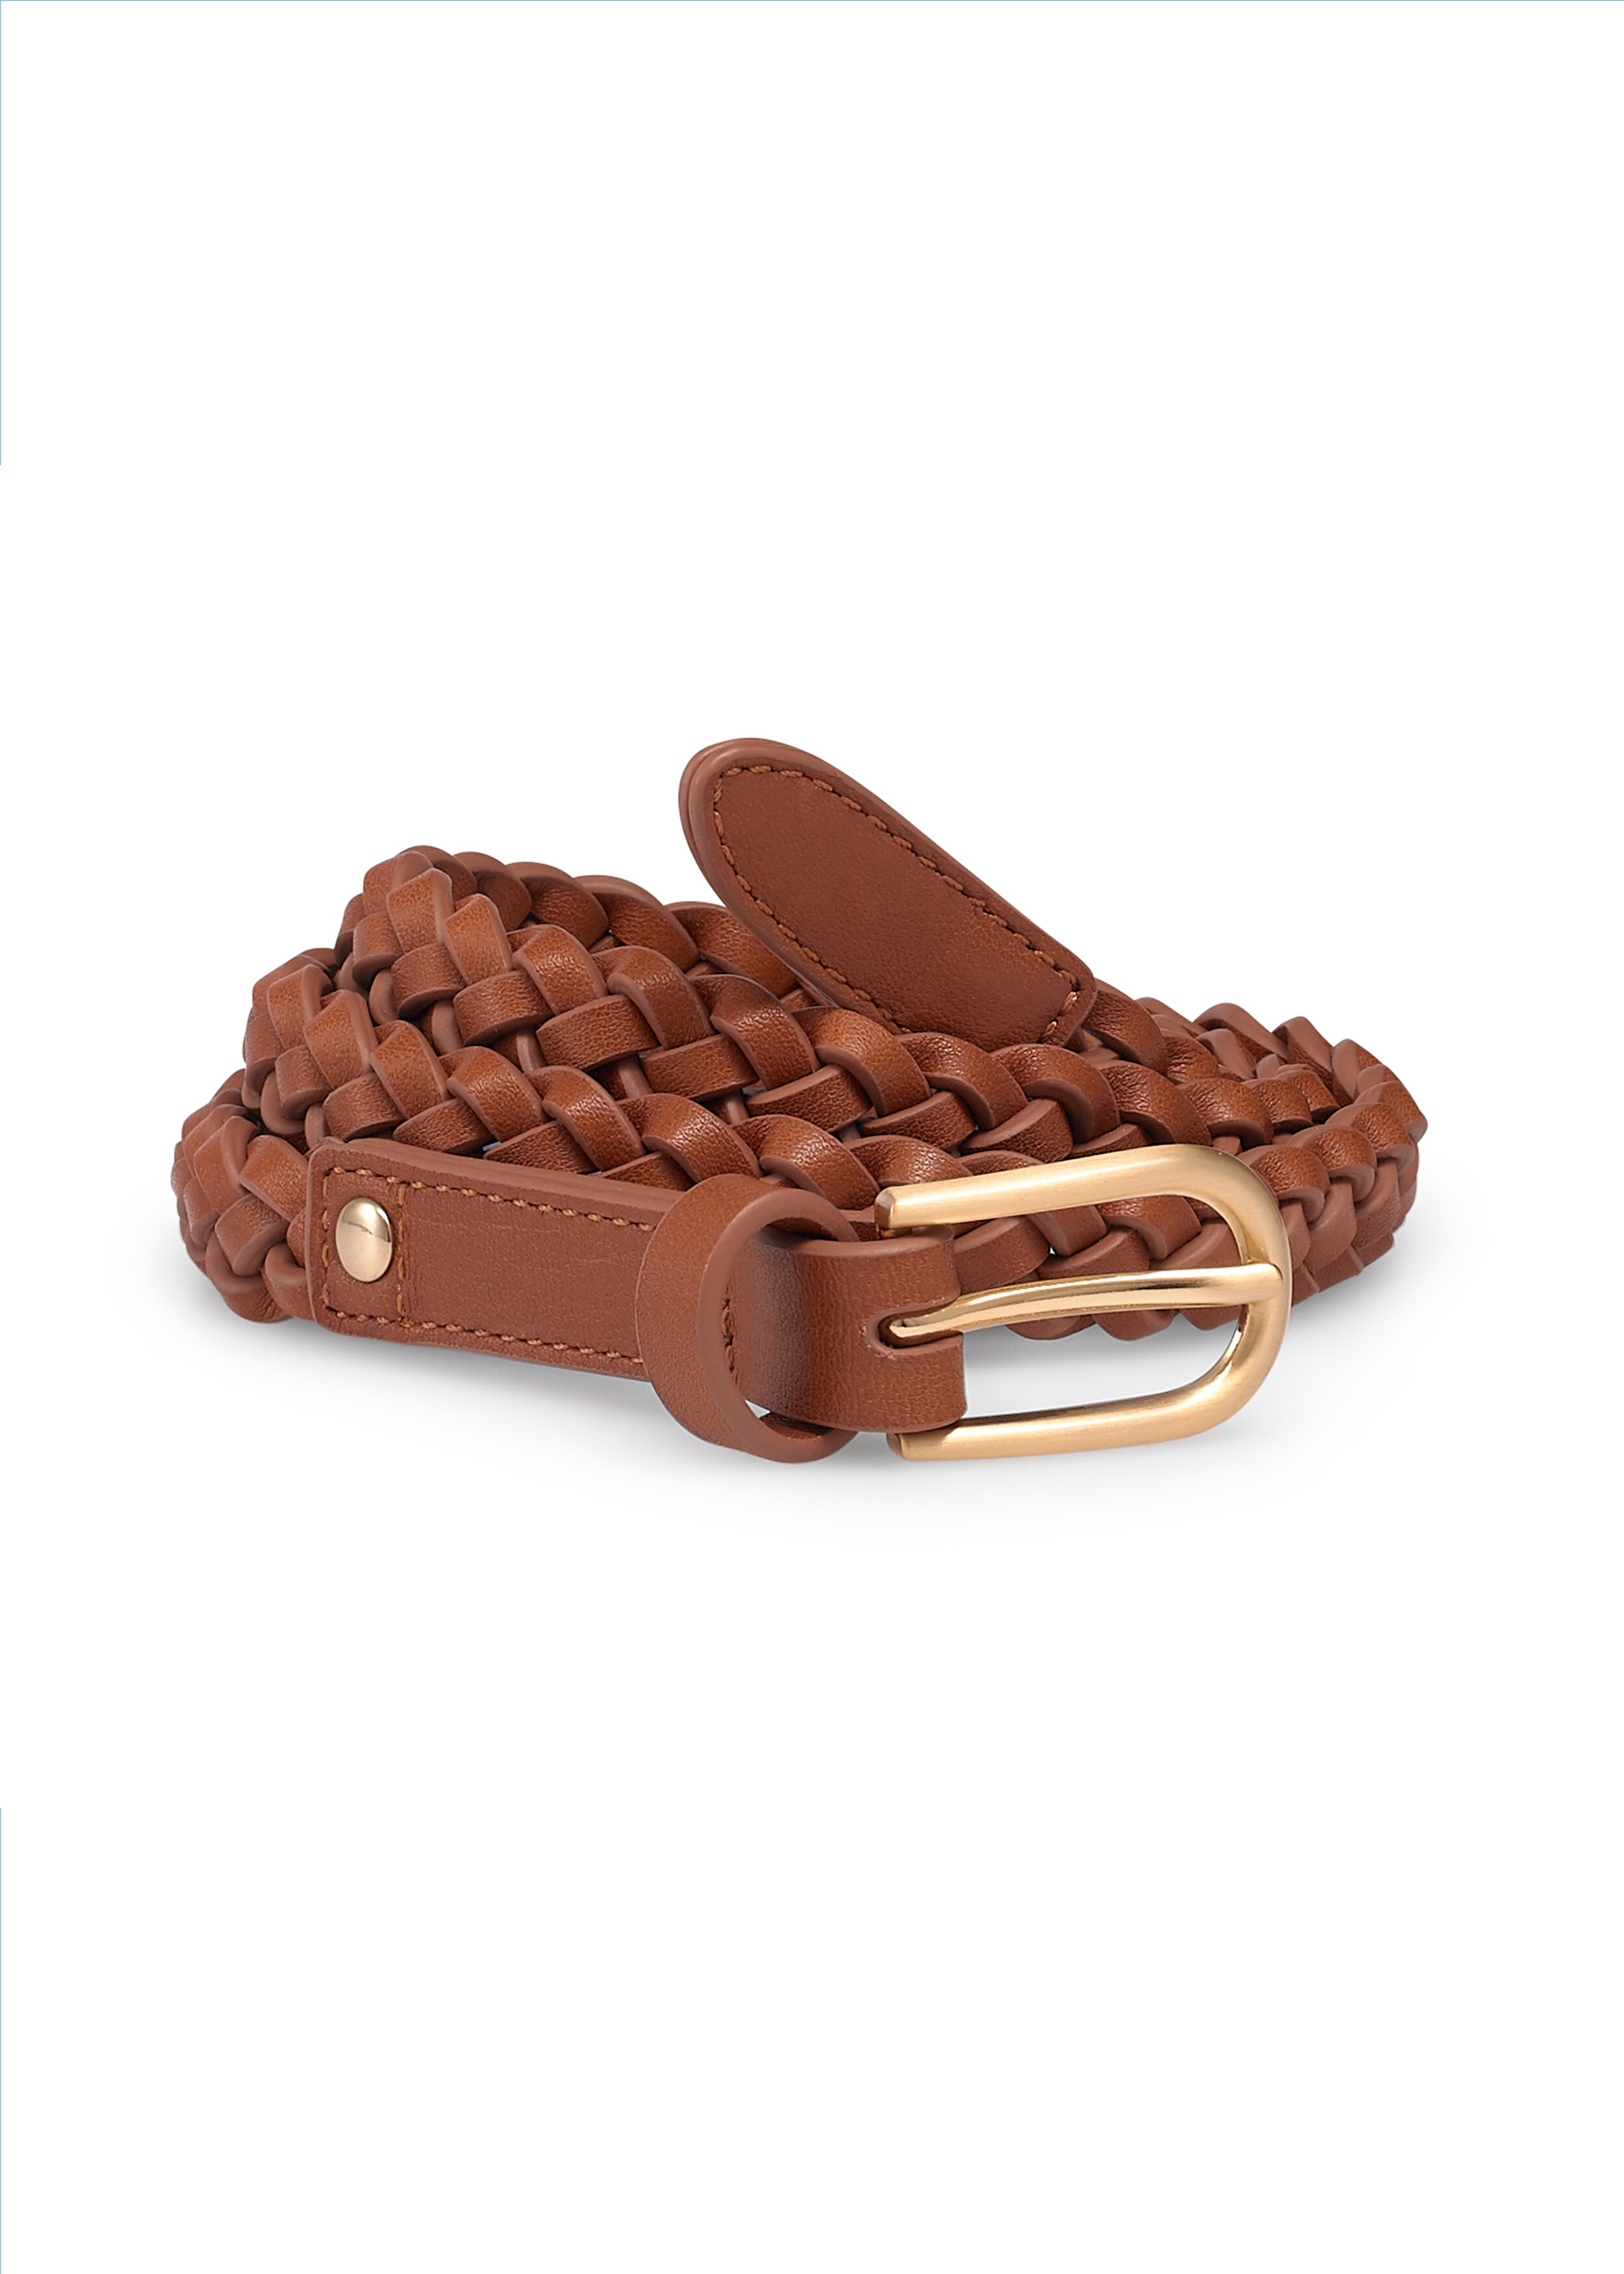 Arrow Hand-Plaited Leather Belt Tan/Gold